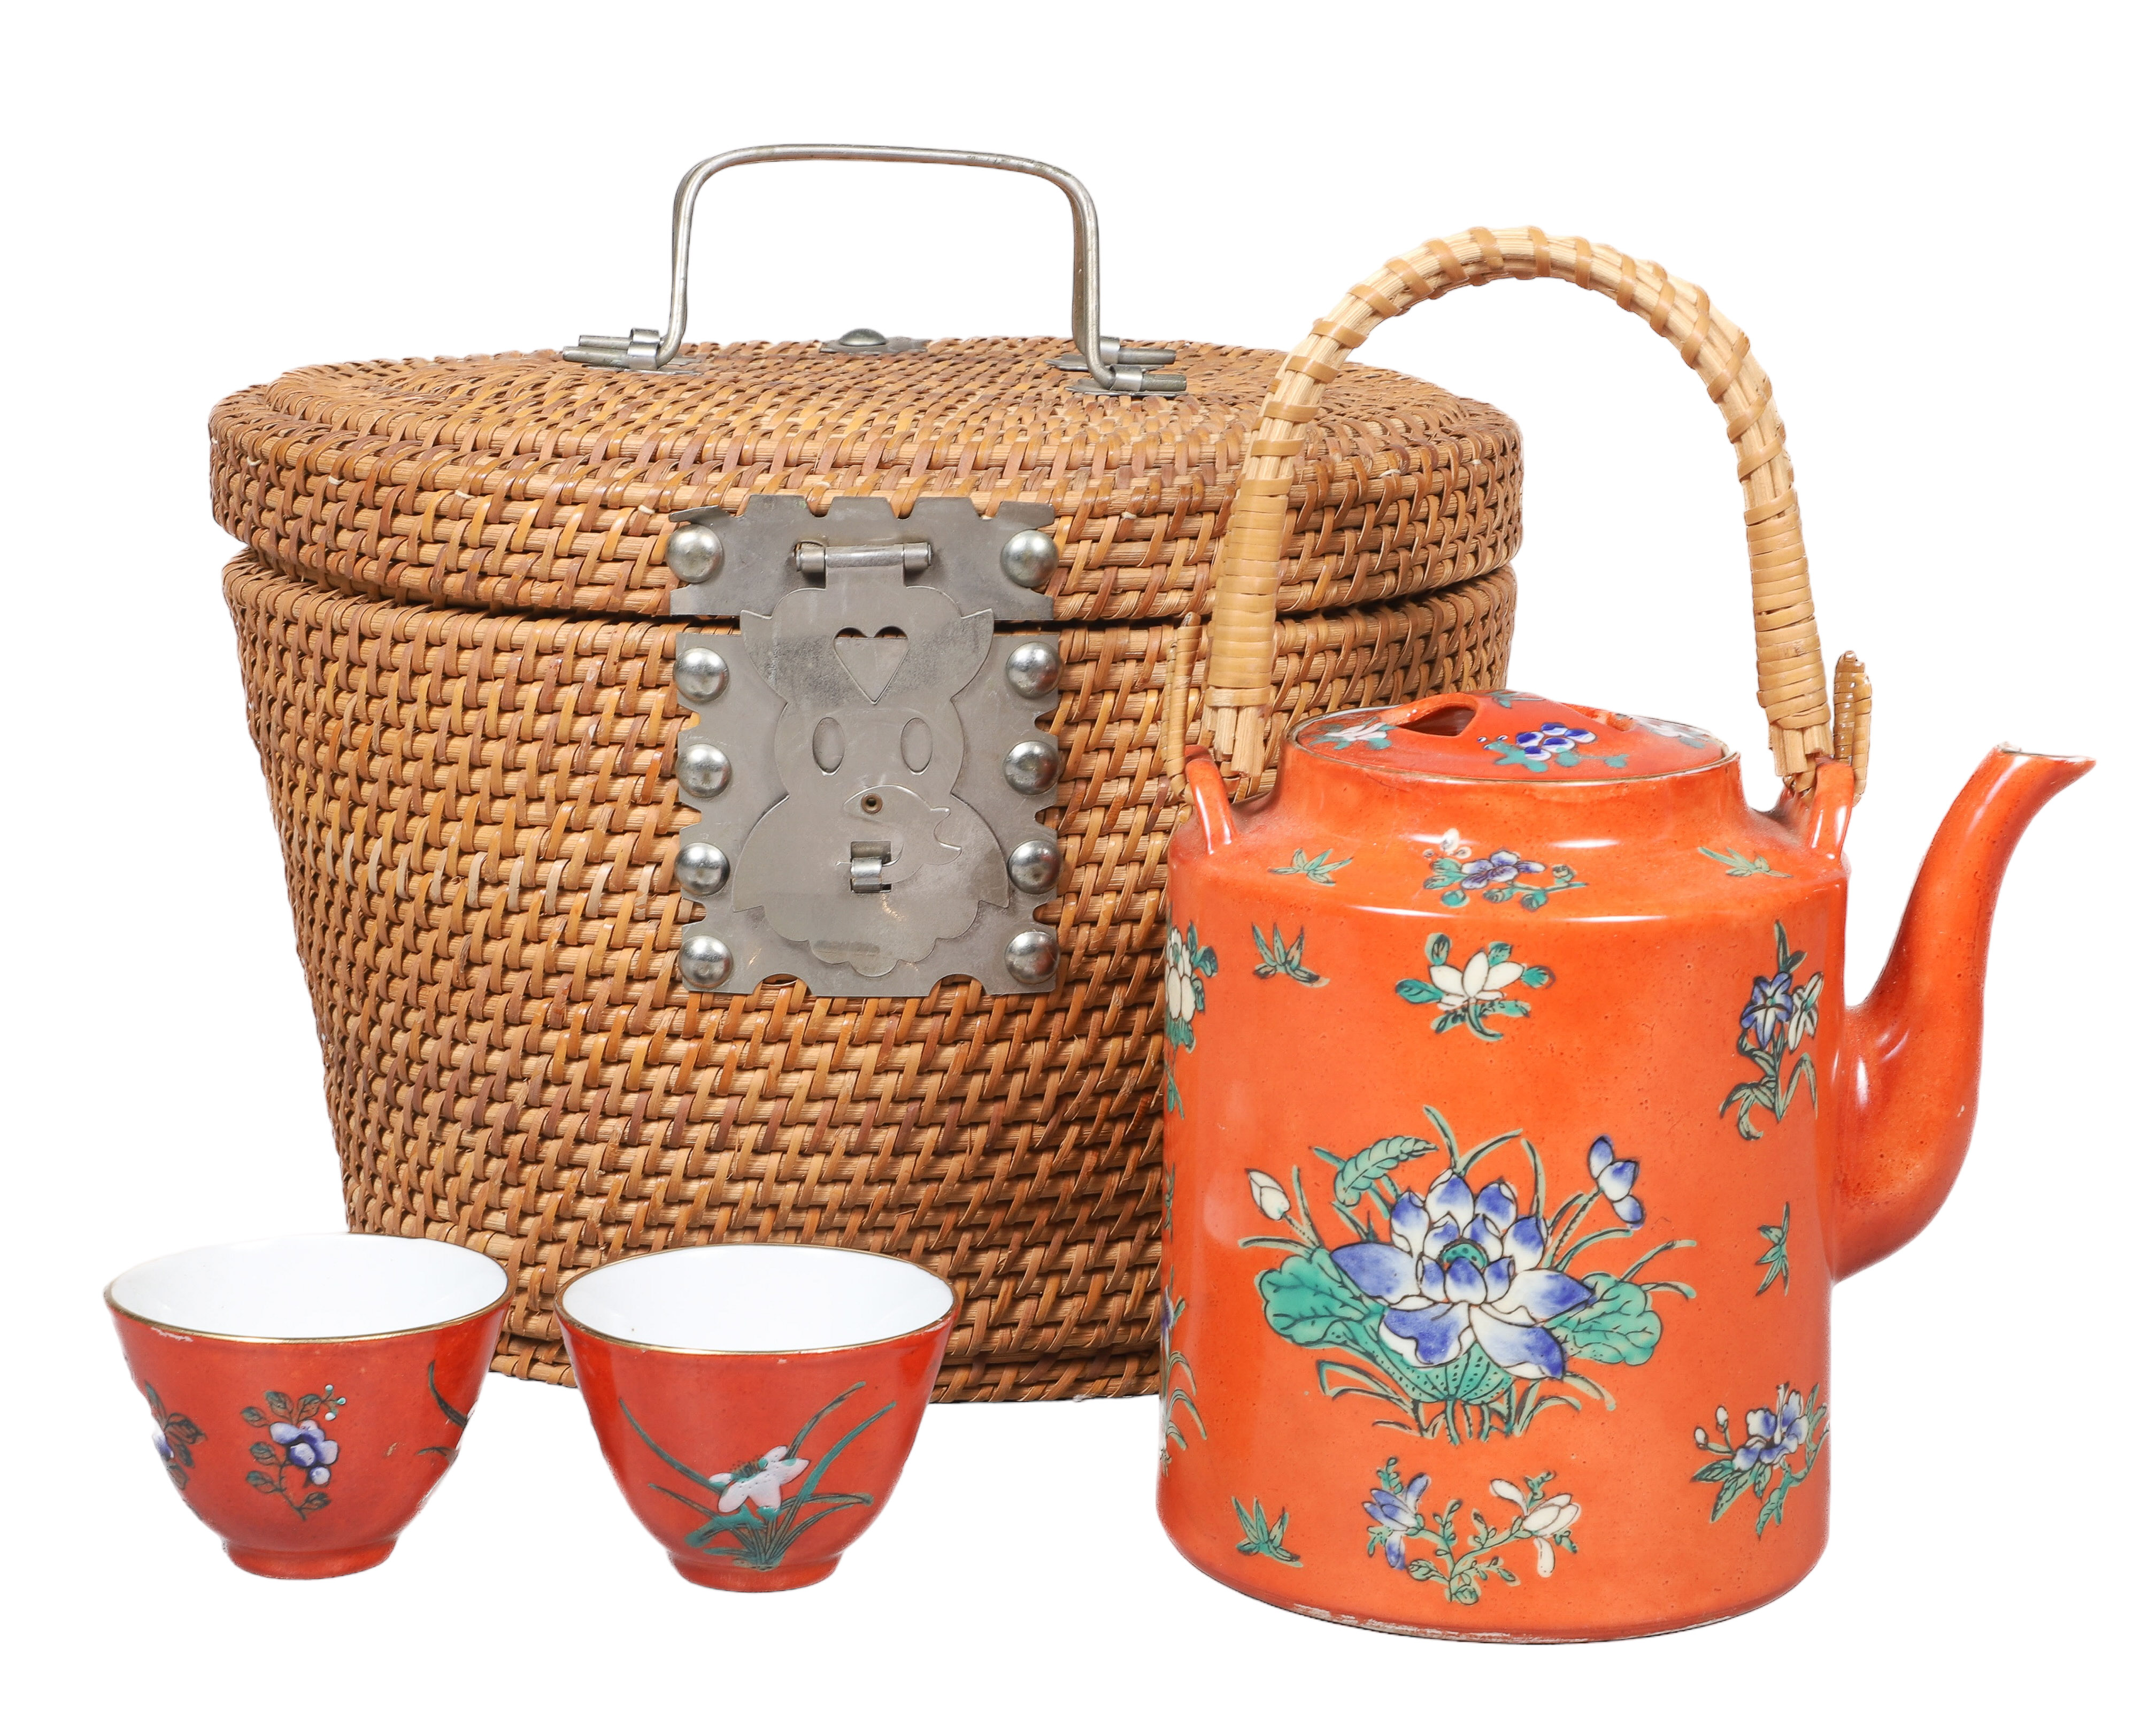 Chinese tea basket, woven basket